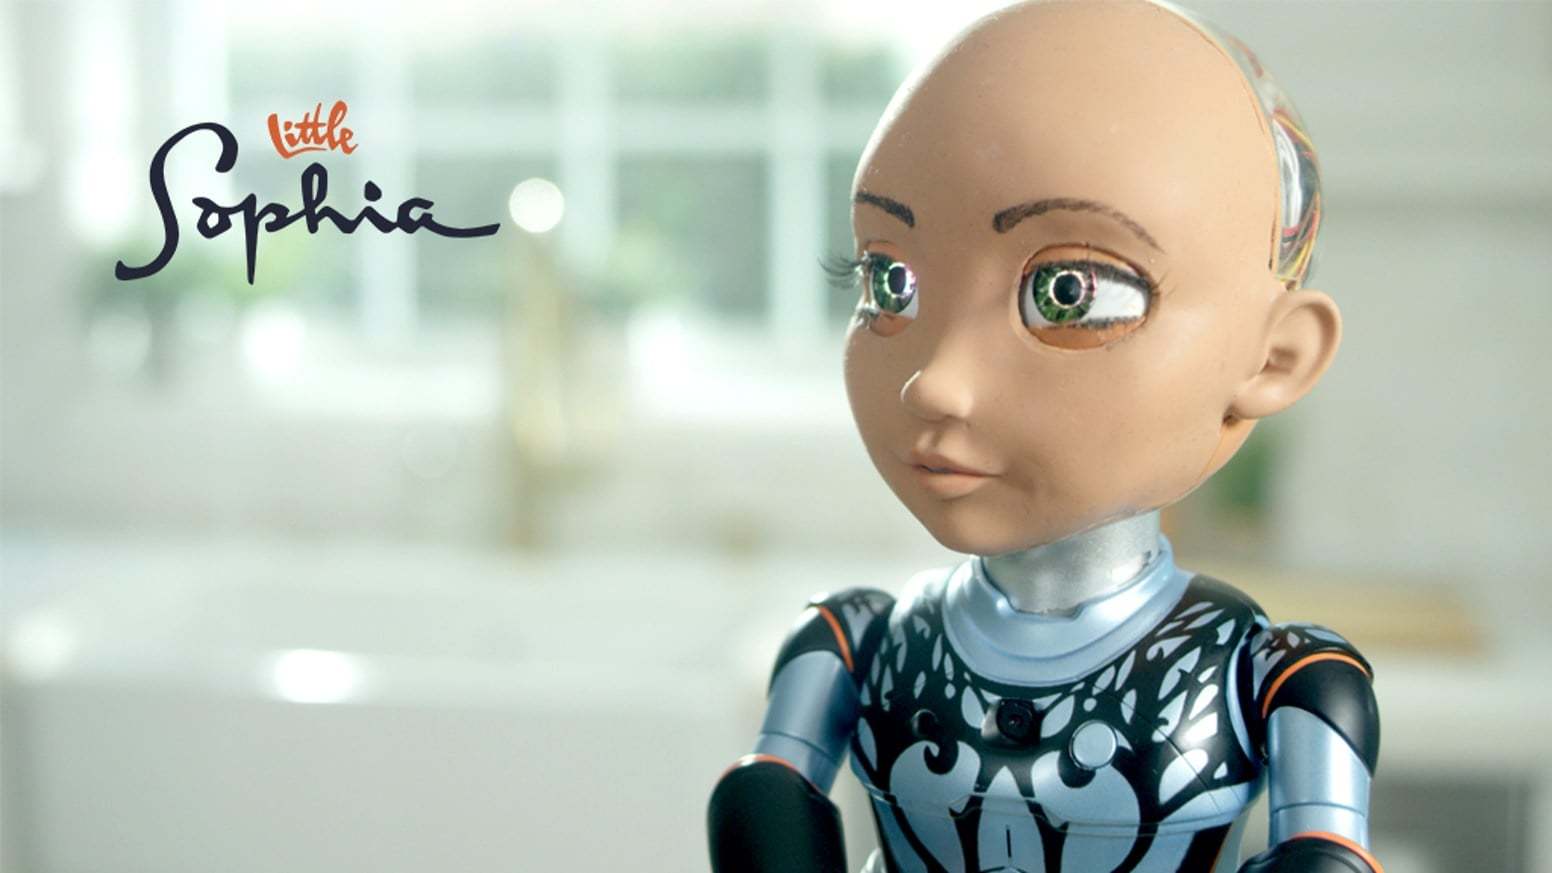 Robot Sophia’ya Küçük Kardeş: Little Sophia